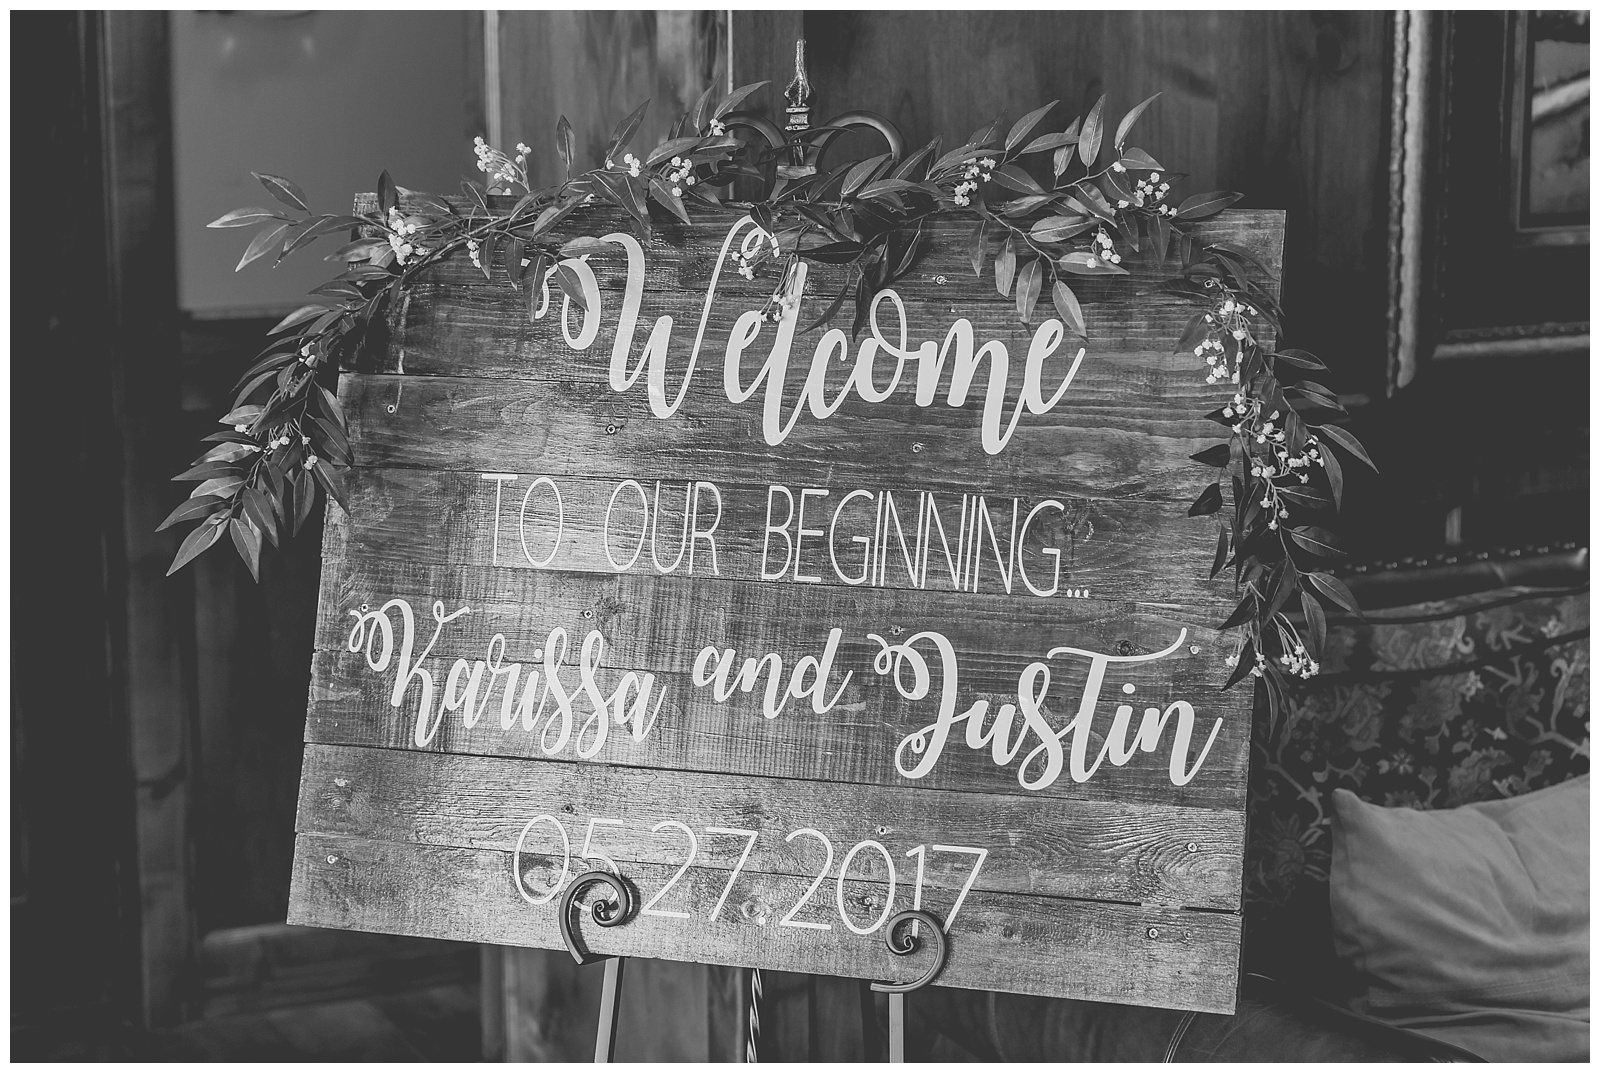 Wedding photography at Staley Farms Golf Club in Kansas City by Wisdom-Watson Weddings.